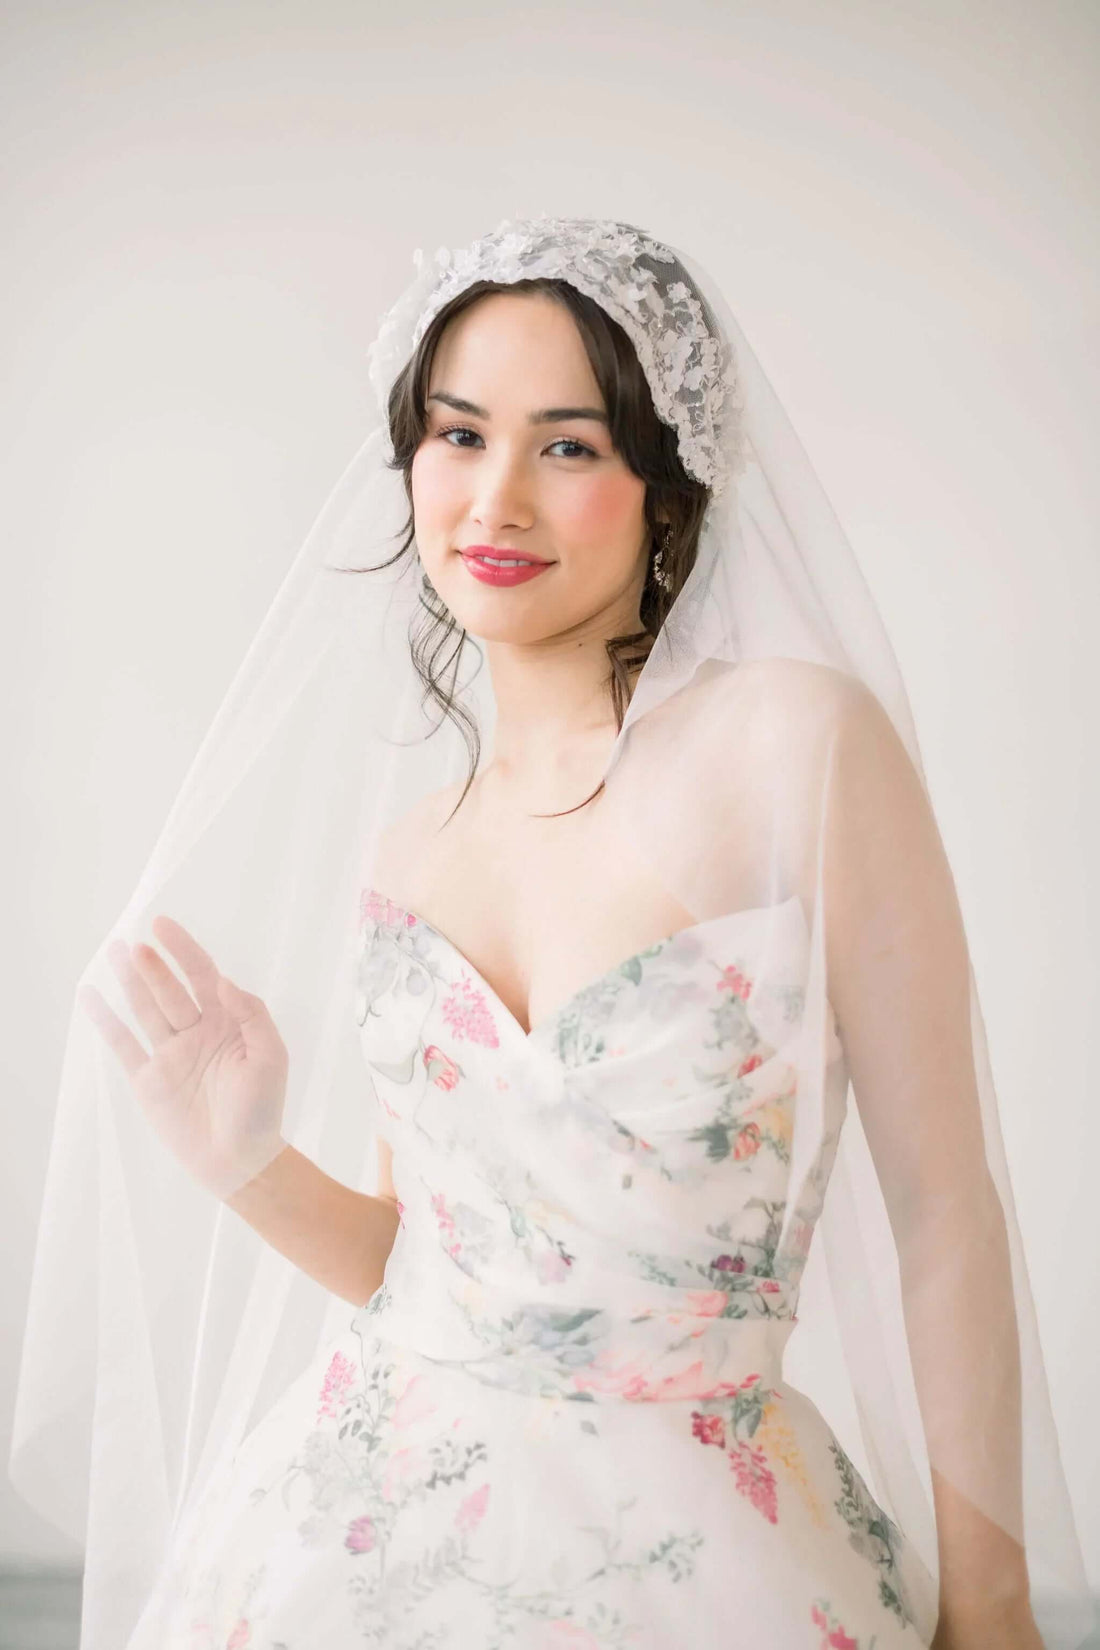 Why buy your bridal veil from Tessa Kim Bridal Tessa Kim